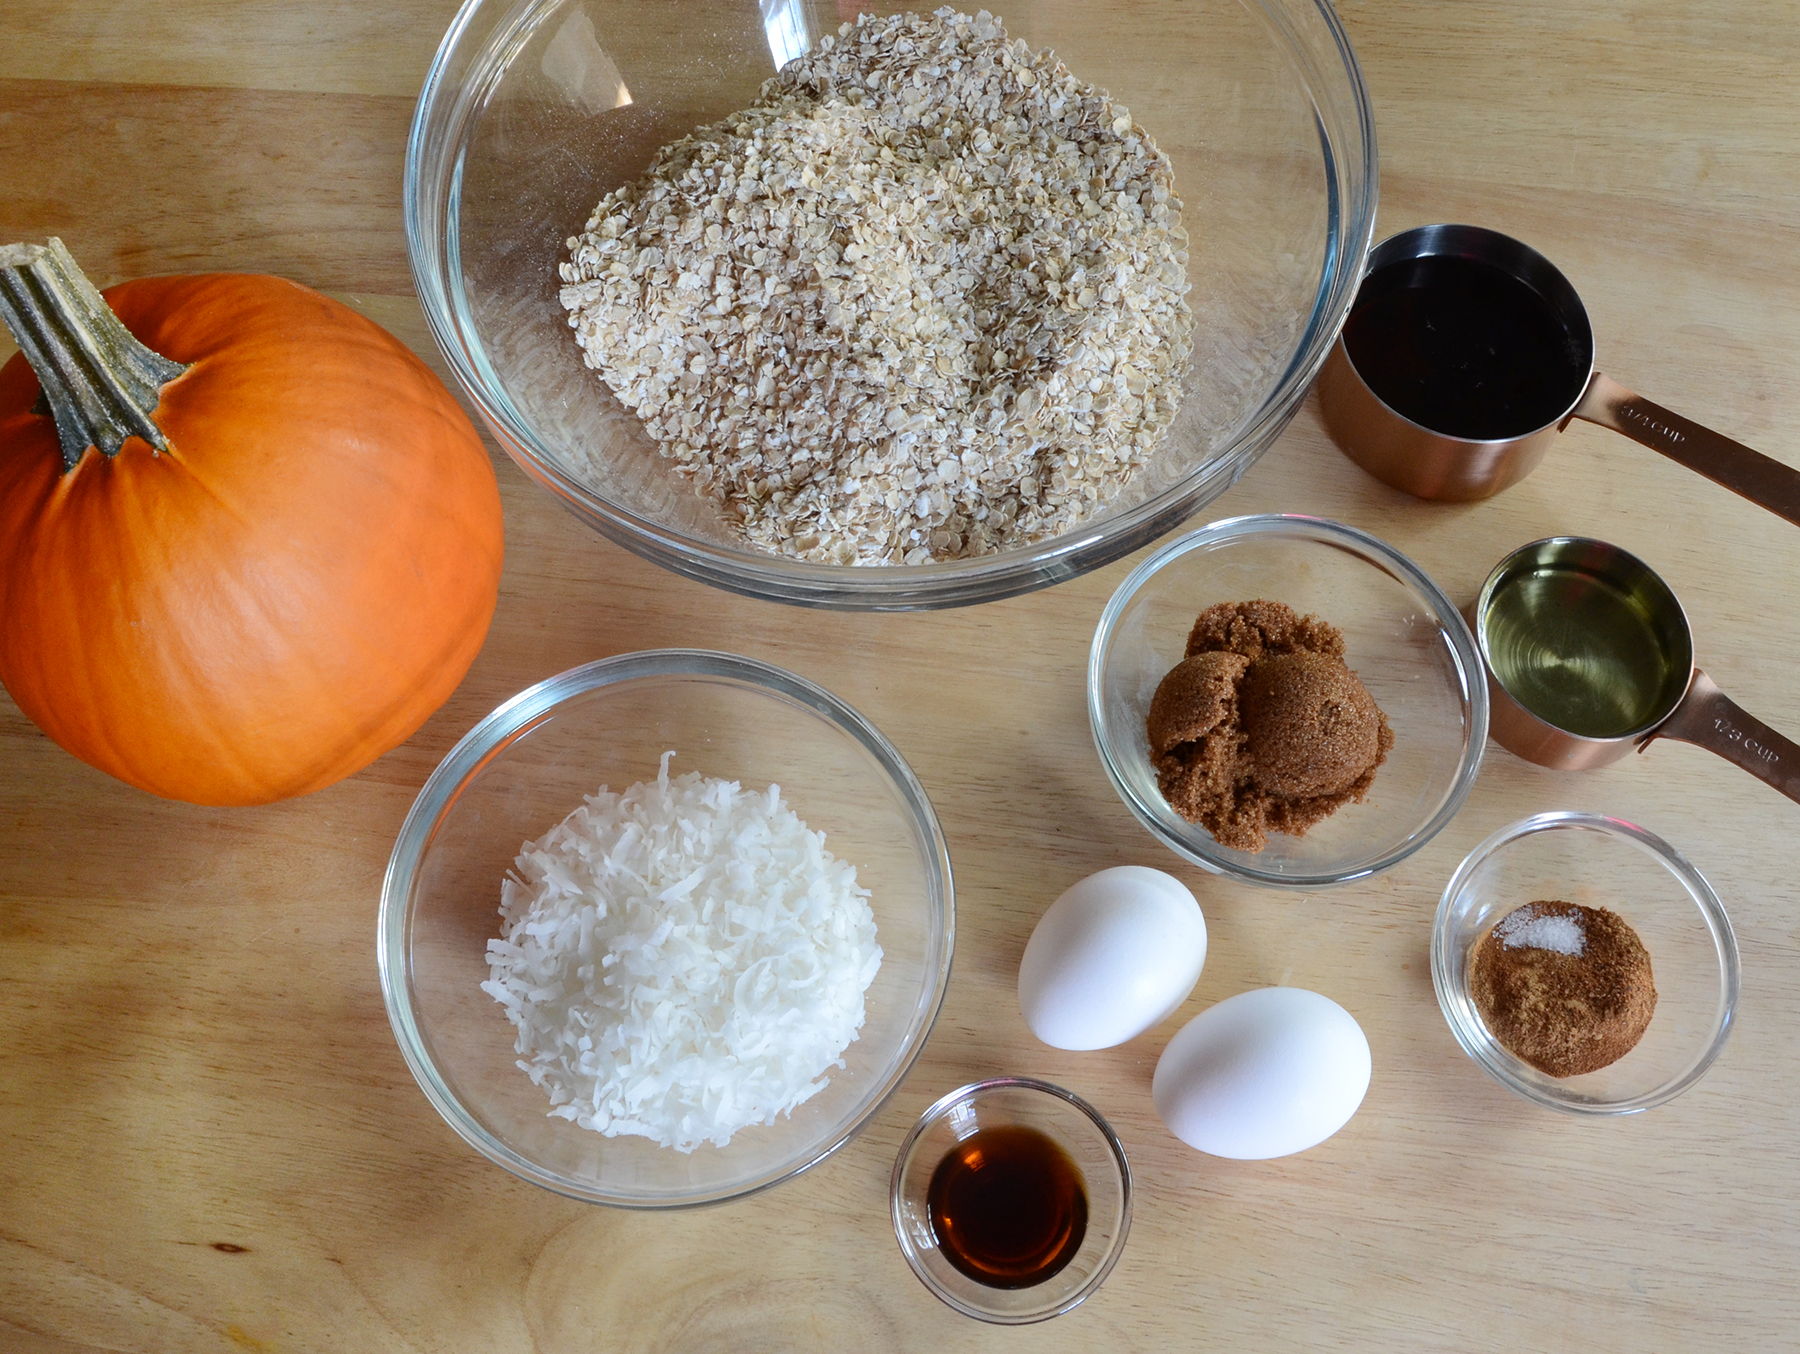 Pumpkin granola recipe ingredients